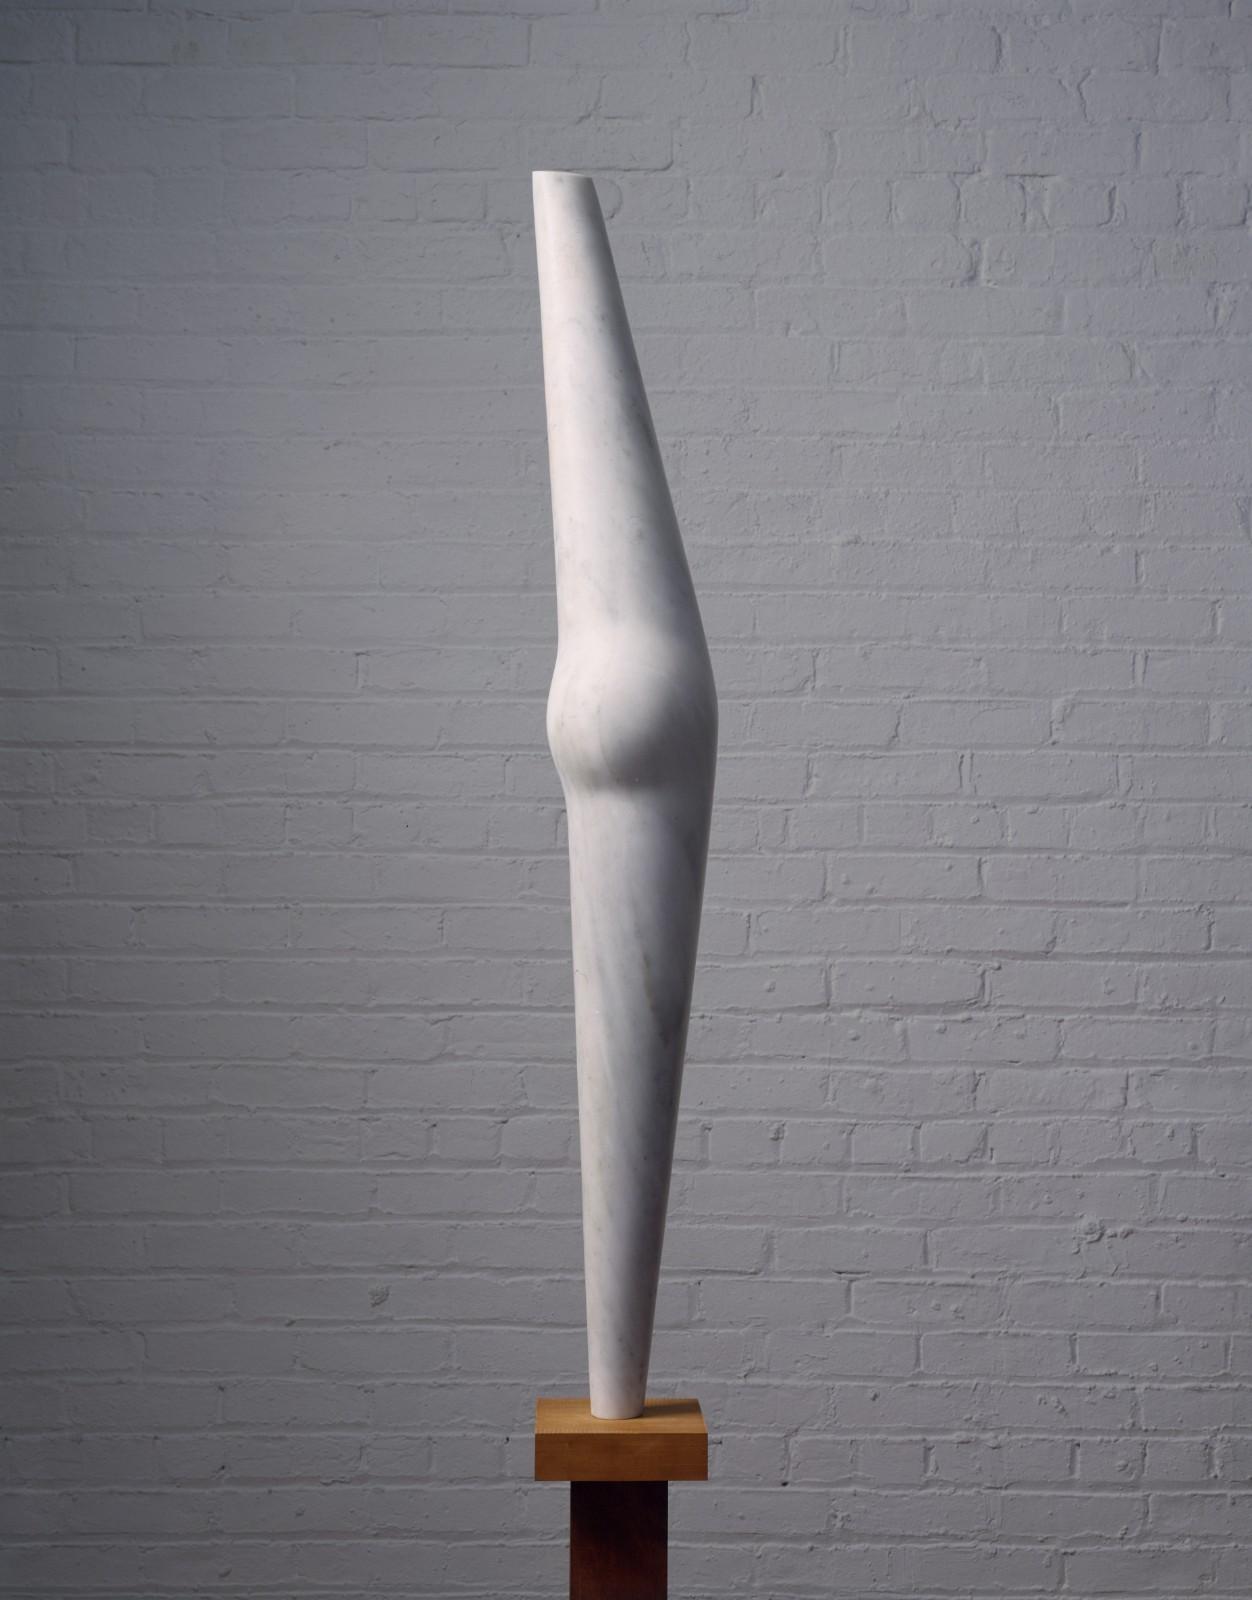 Isamu Noguchi (American, 1904–1988), Pregnant Bird, 1958